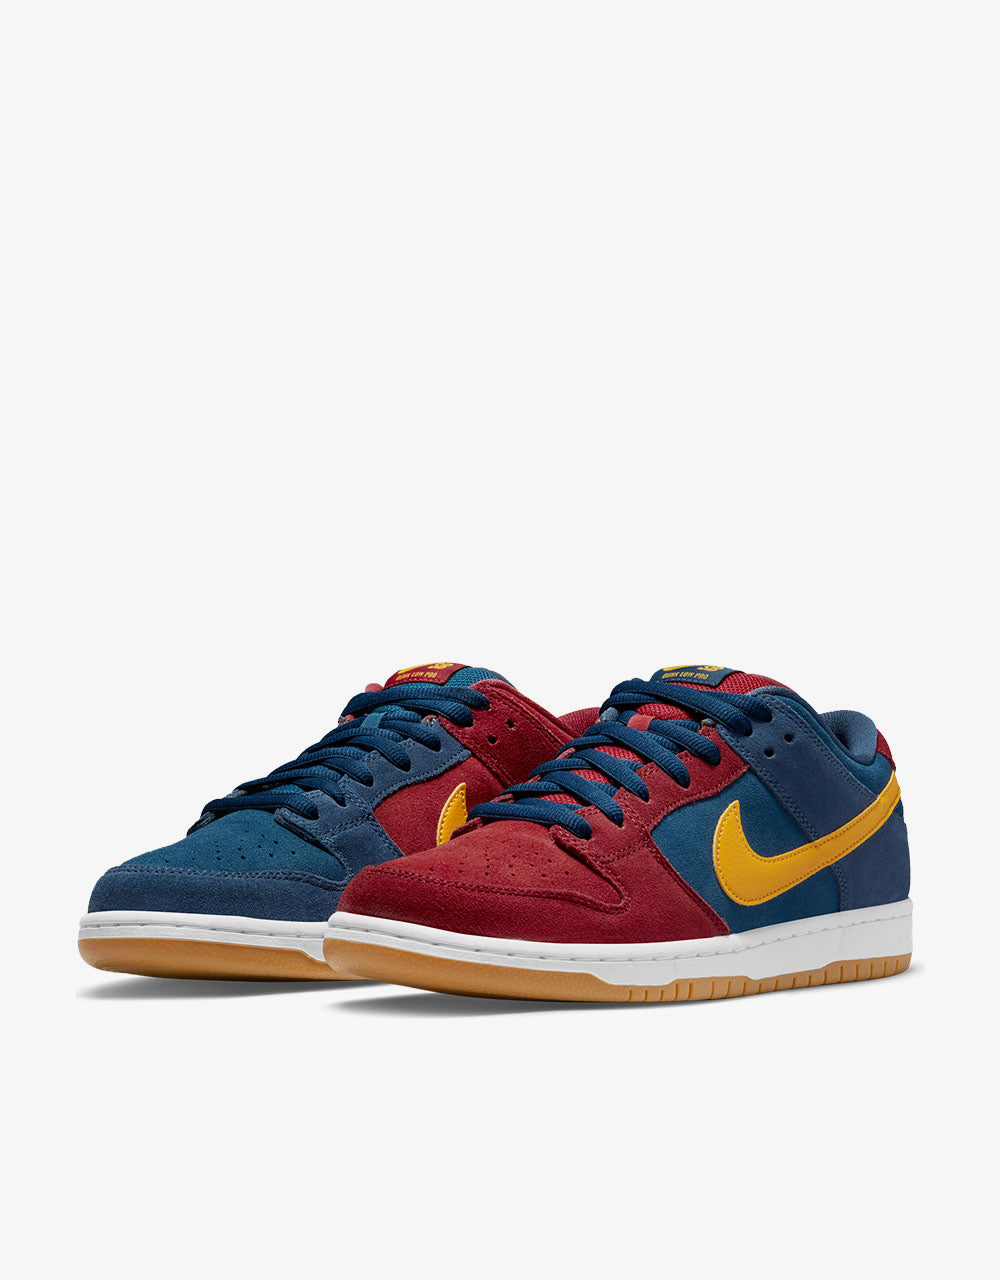 Nike SB 'Barcalona' Dunk Low Pro Skate Shoes - Navy/University Gold-Gym Red-Court Blue